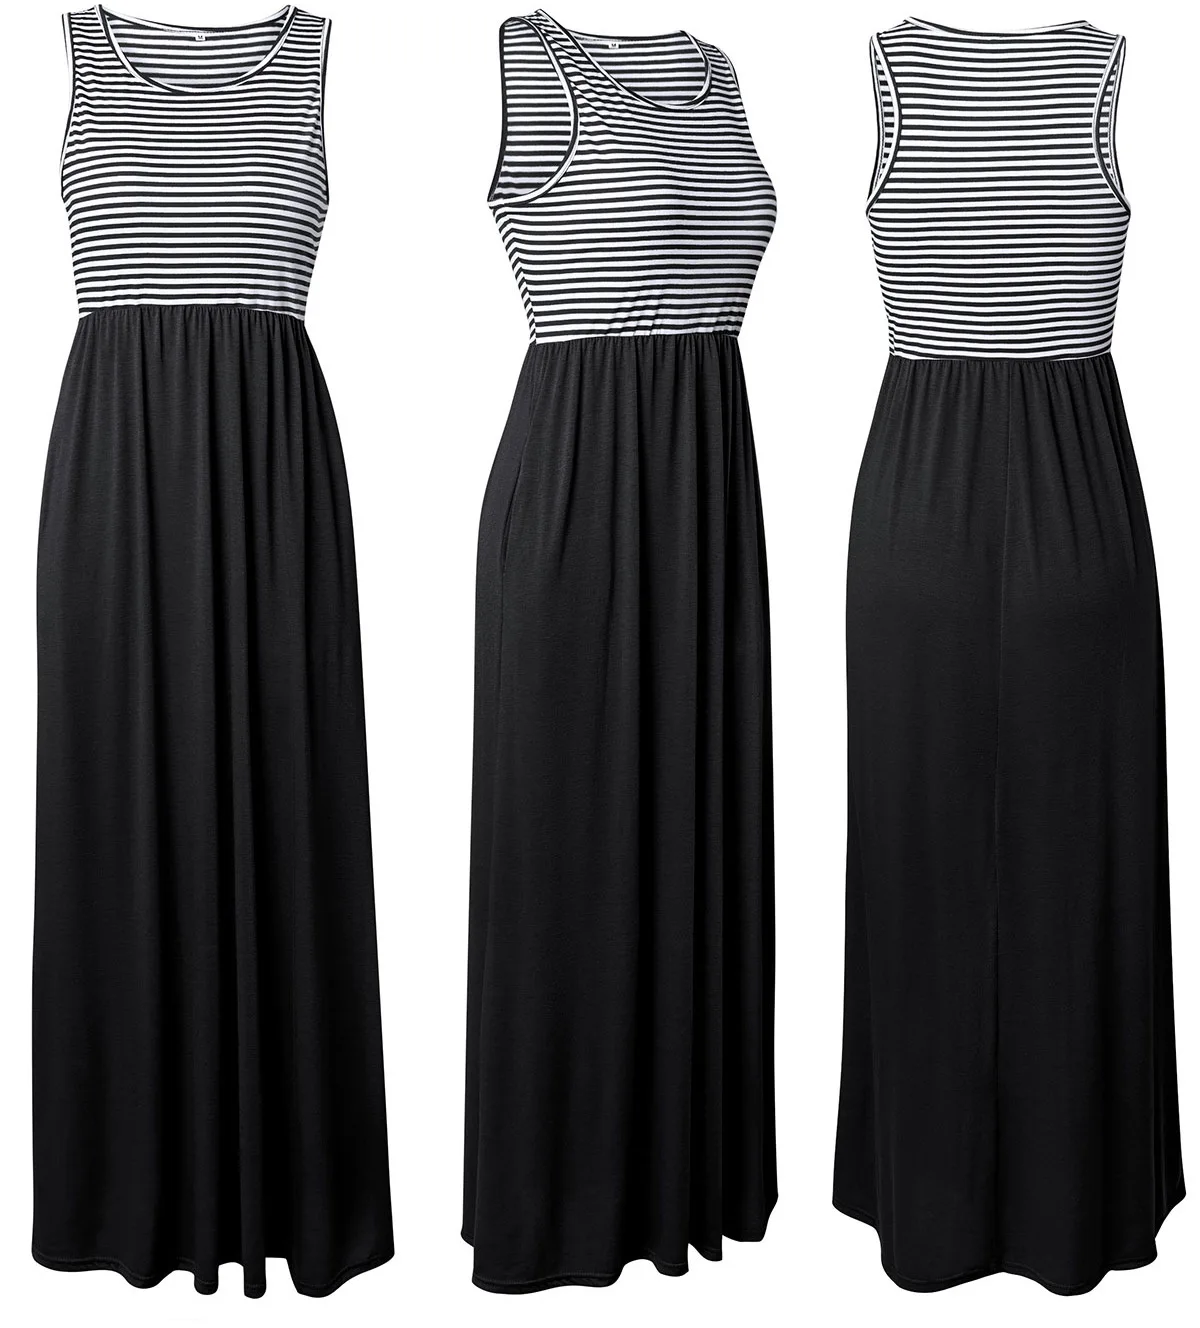 Wholesale Fashion Sleeveless Stripe Cotton Women Summer Long Dress ...